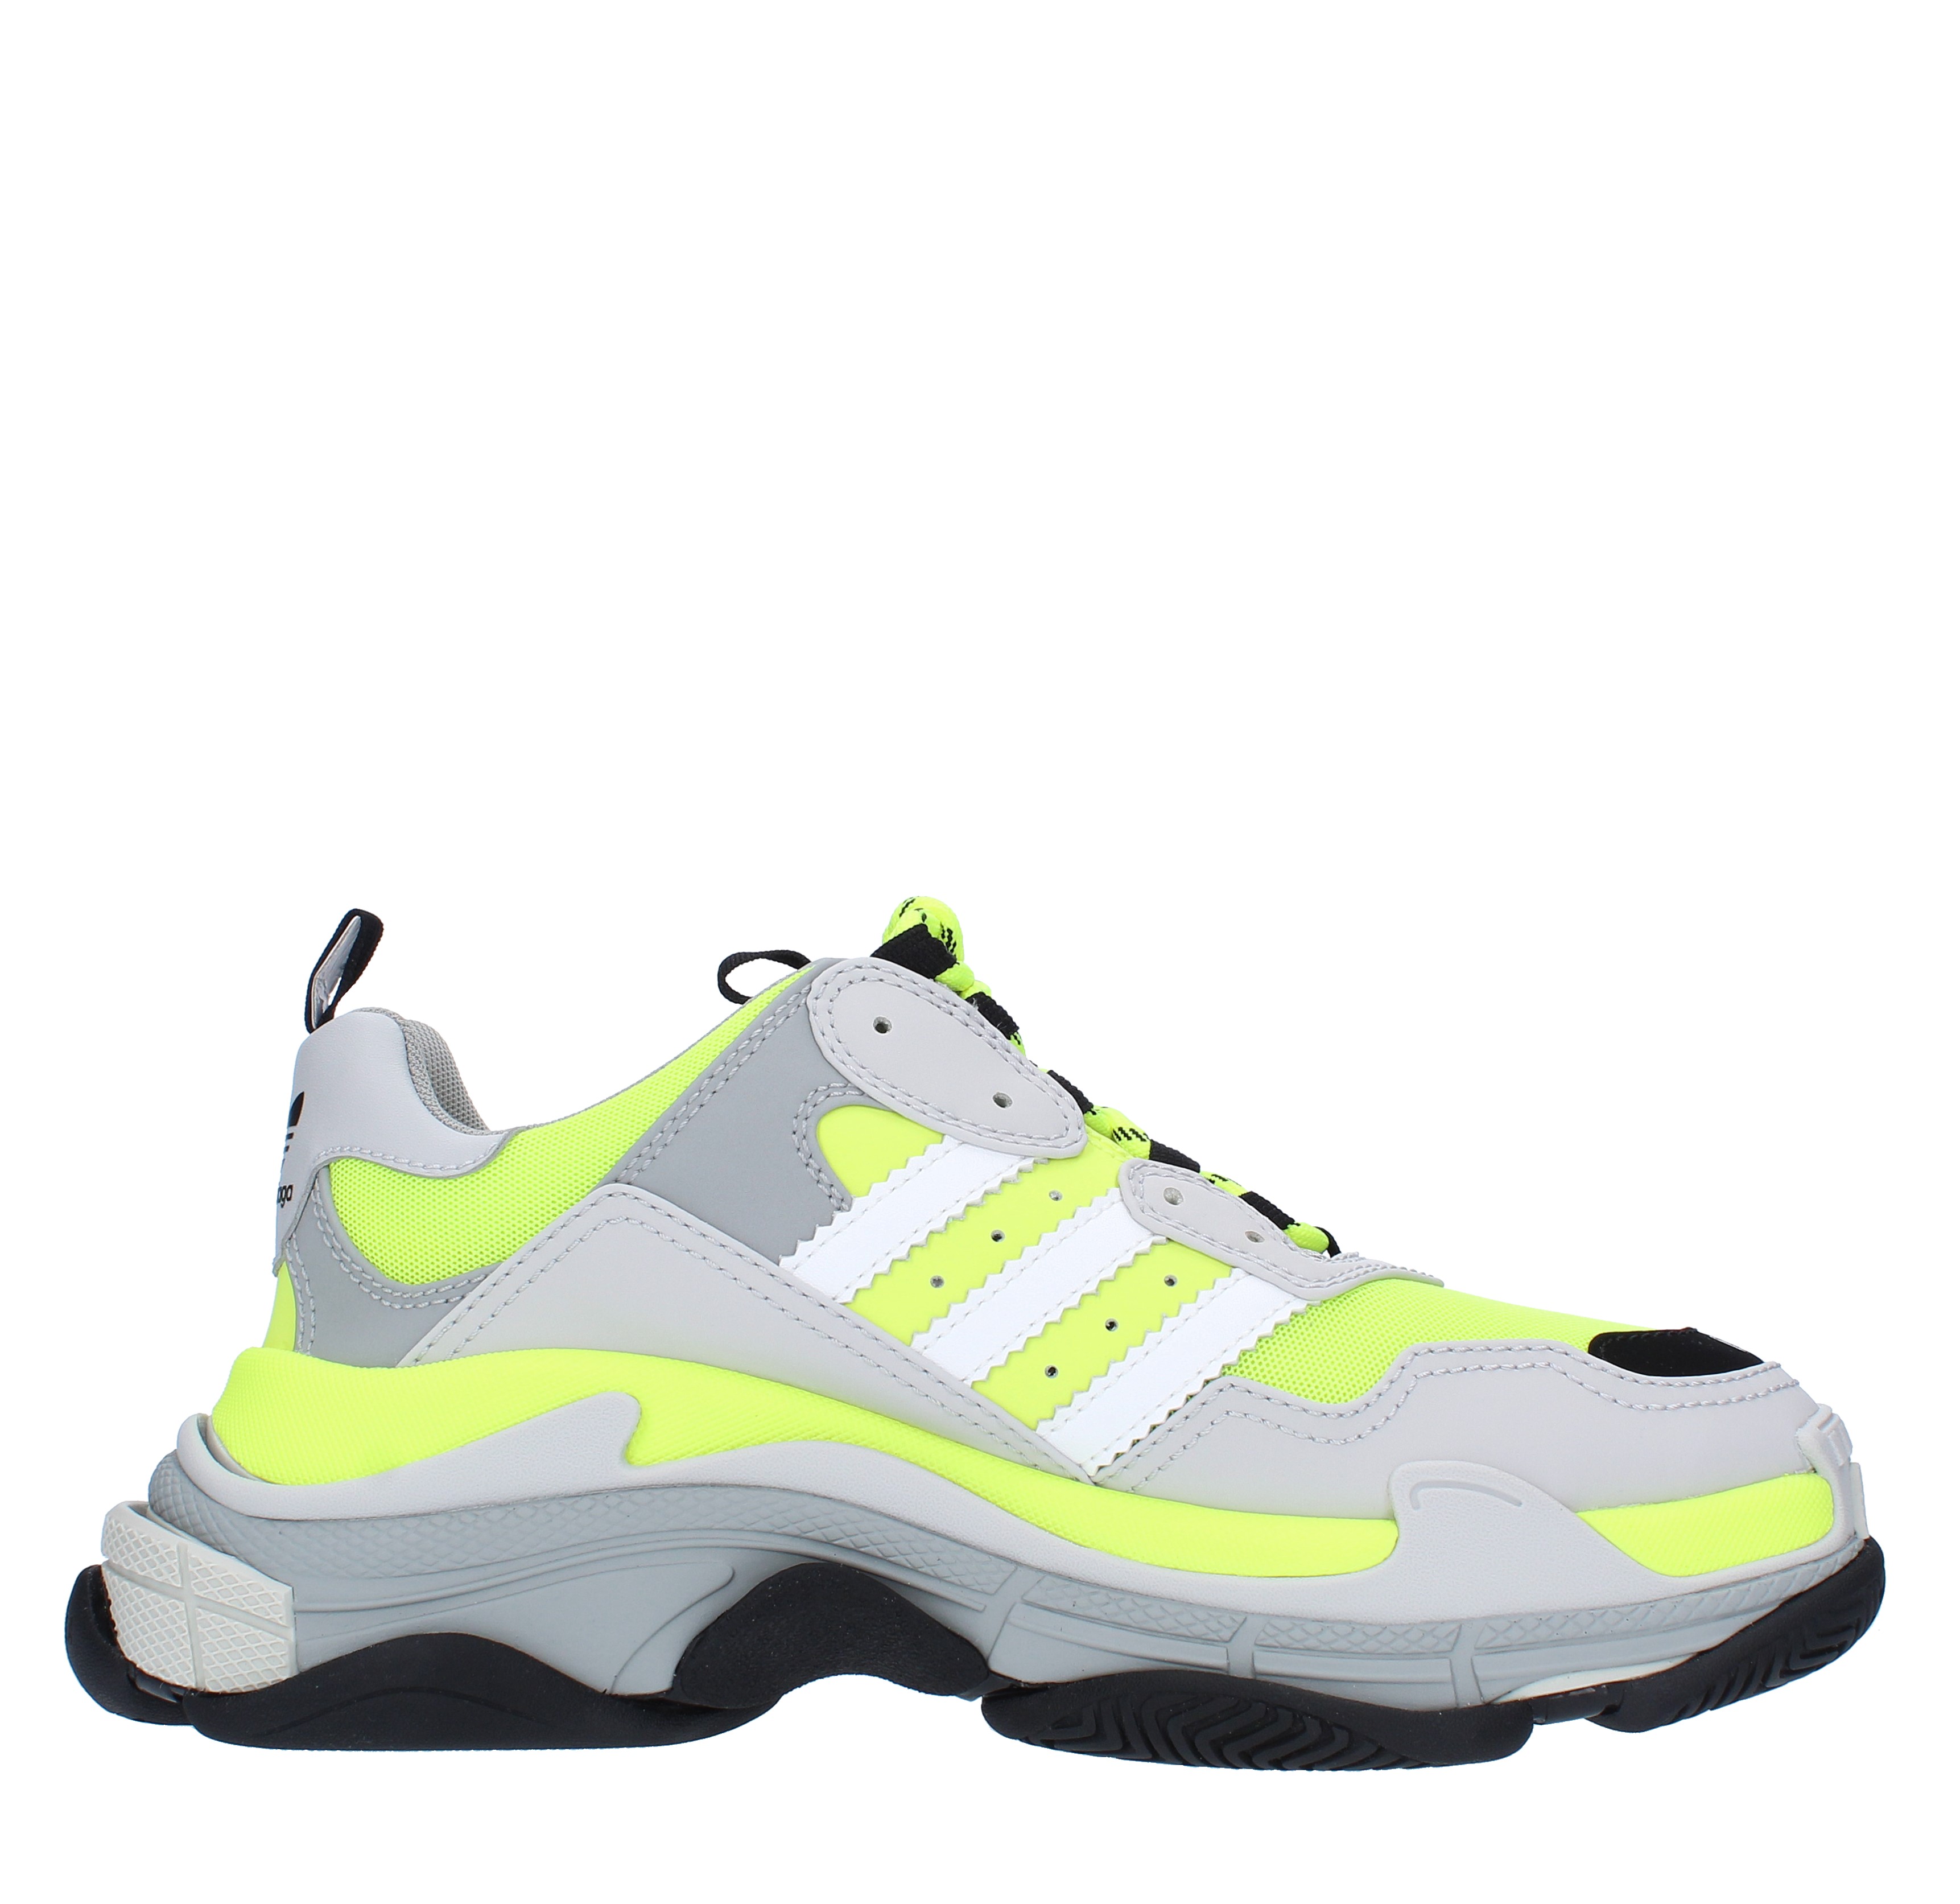 Sneakers BALENCIAGA X ADIDAS TRIPLE S in doppia schiuma e mesh giallo neon,  nero e grigio - BALENCIAGA X ADIDAS - Ginevra calzature